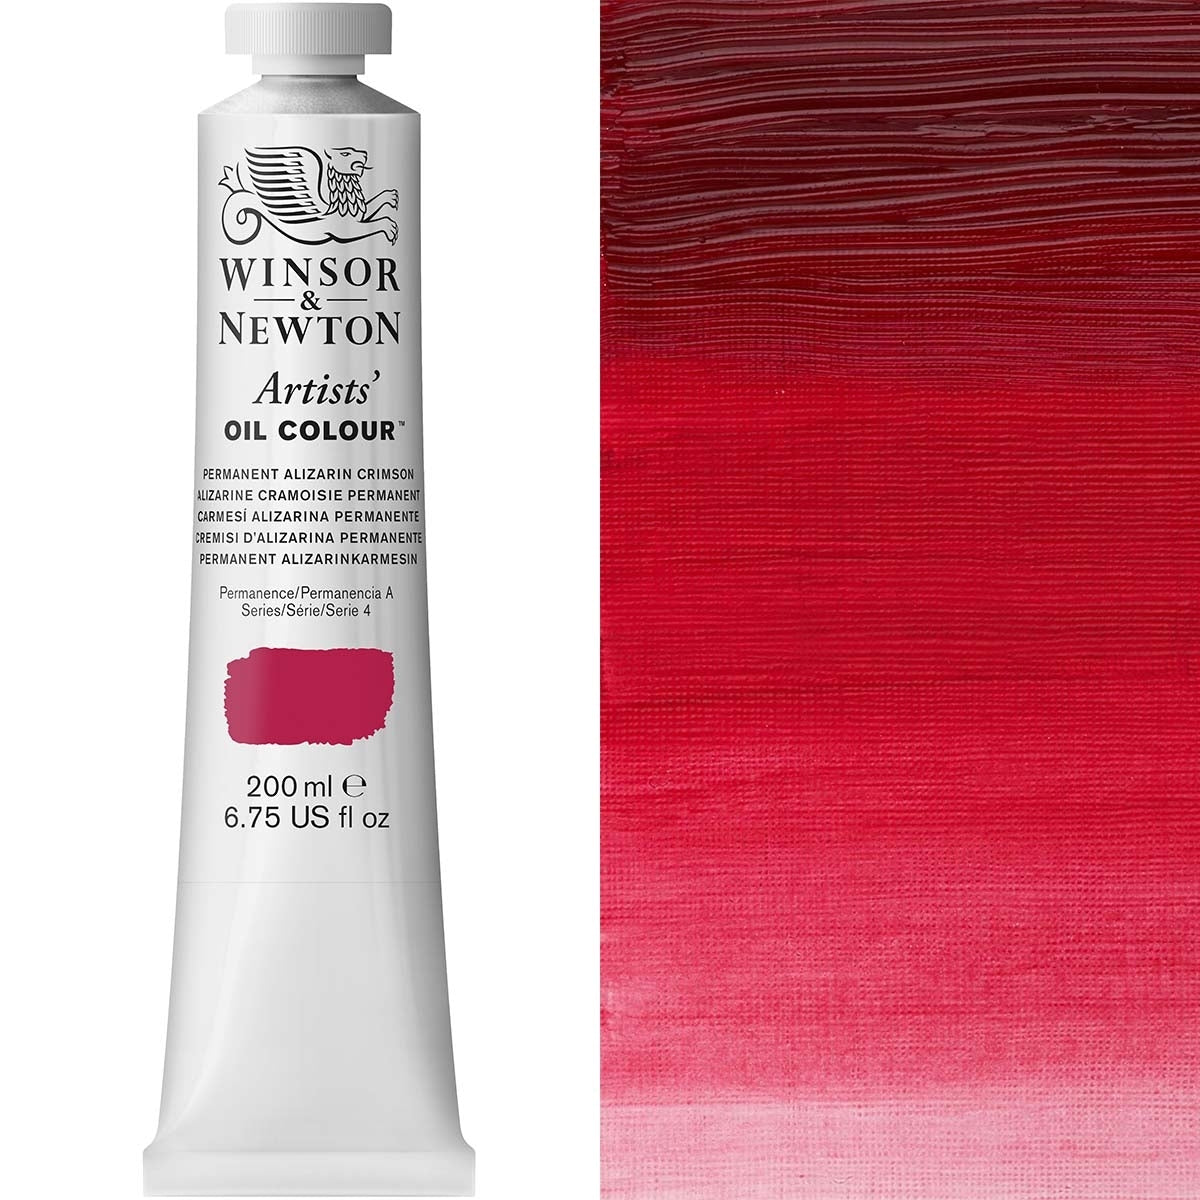 Winsor en Newton - Oilkleur van artiesten - 200 ml - Permanente Alizarin Crimson